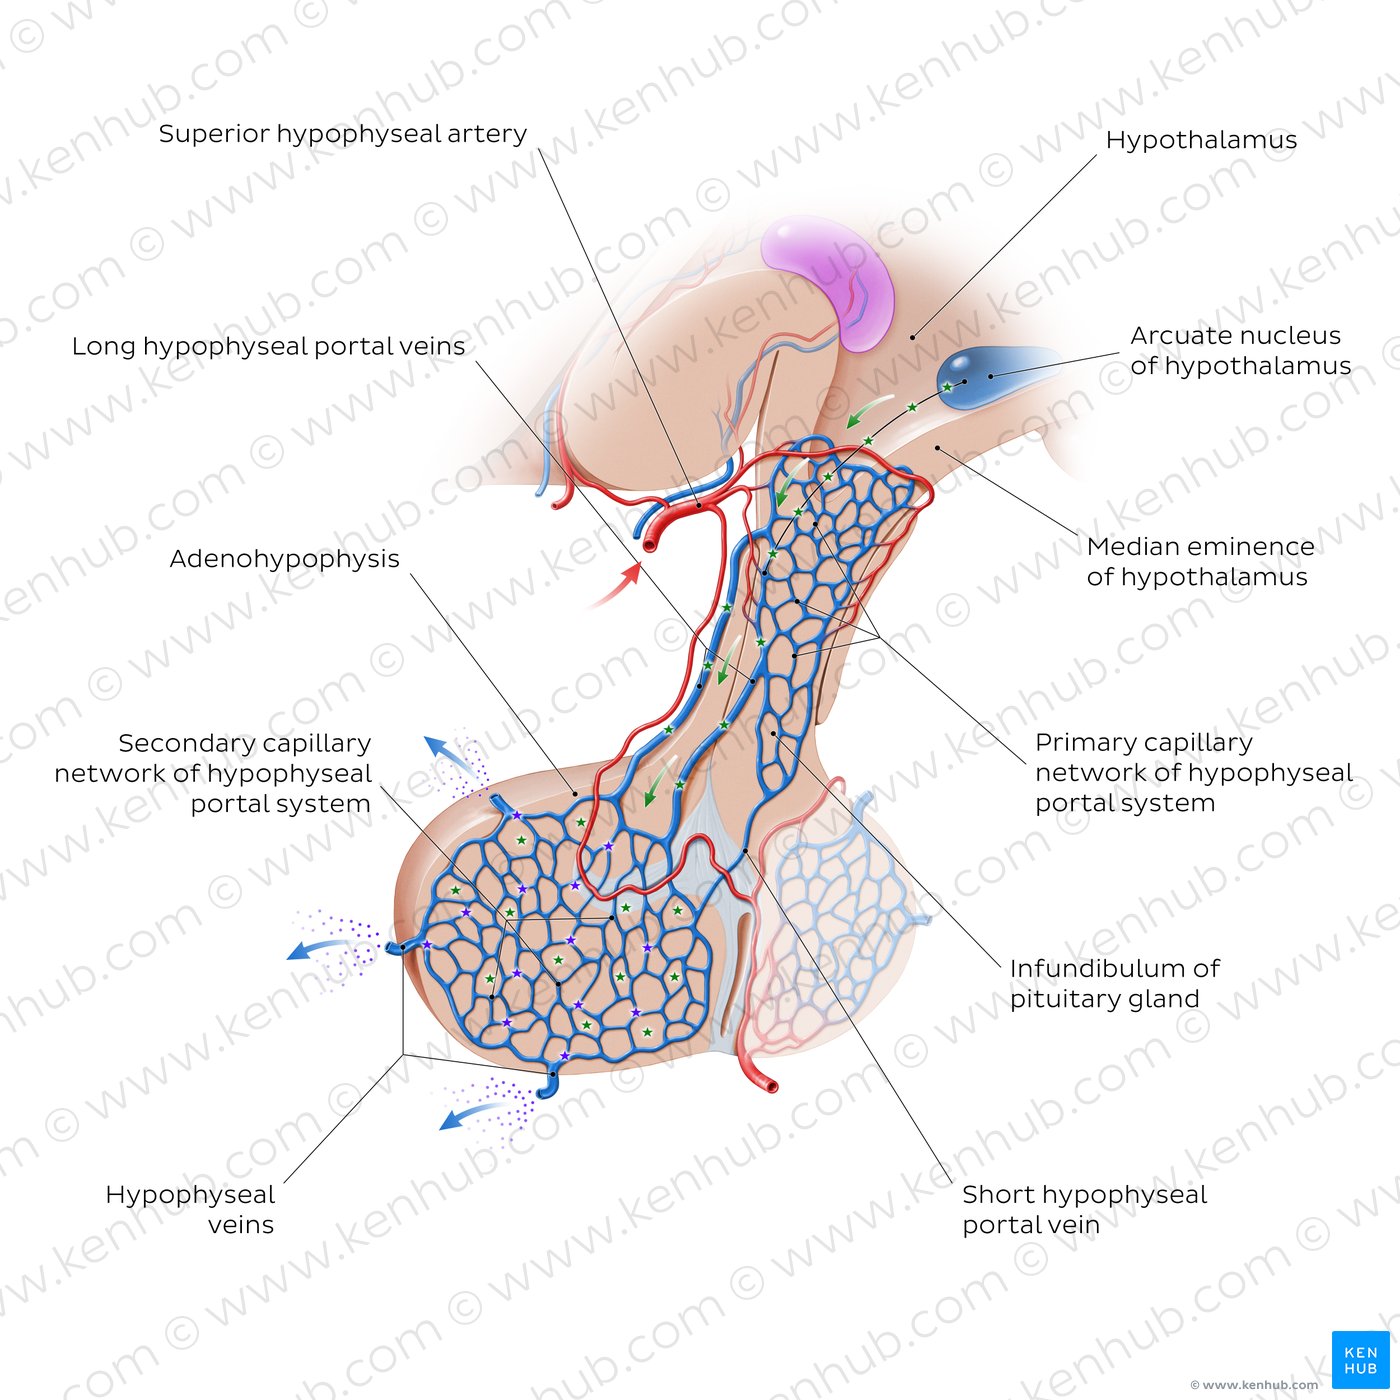 Hypophyseal portal system: Overview